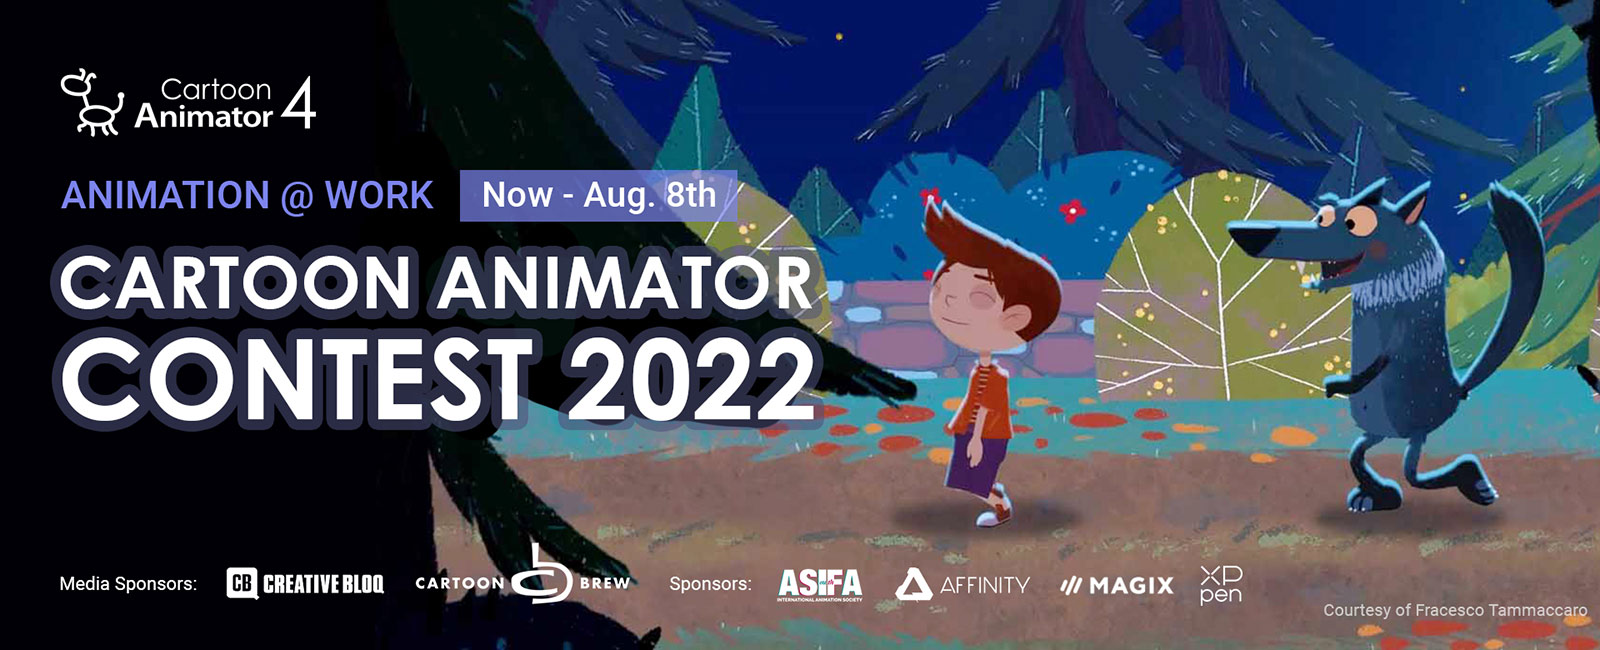 Cartoon Animation Contest 2022